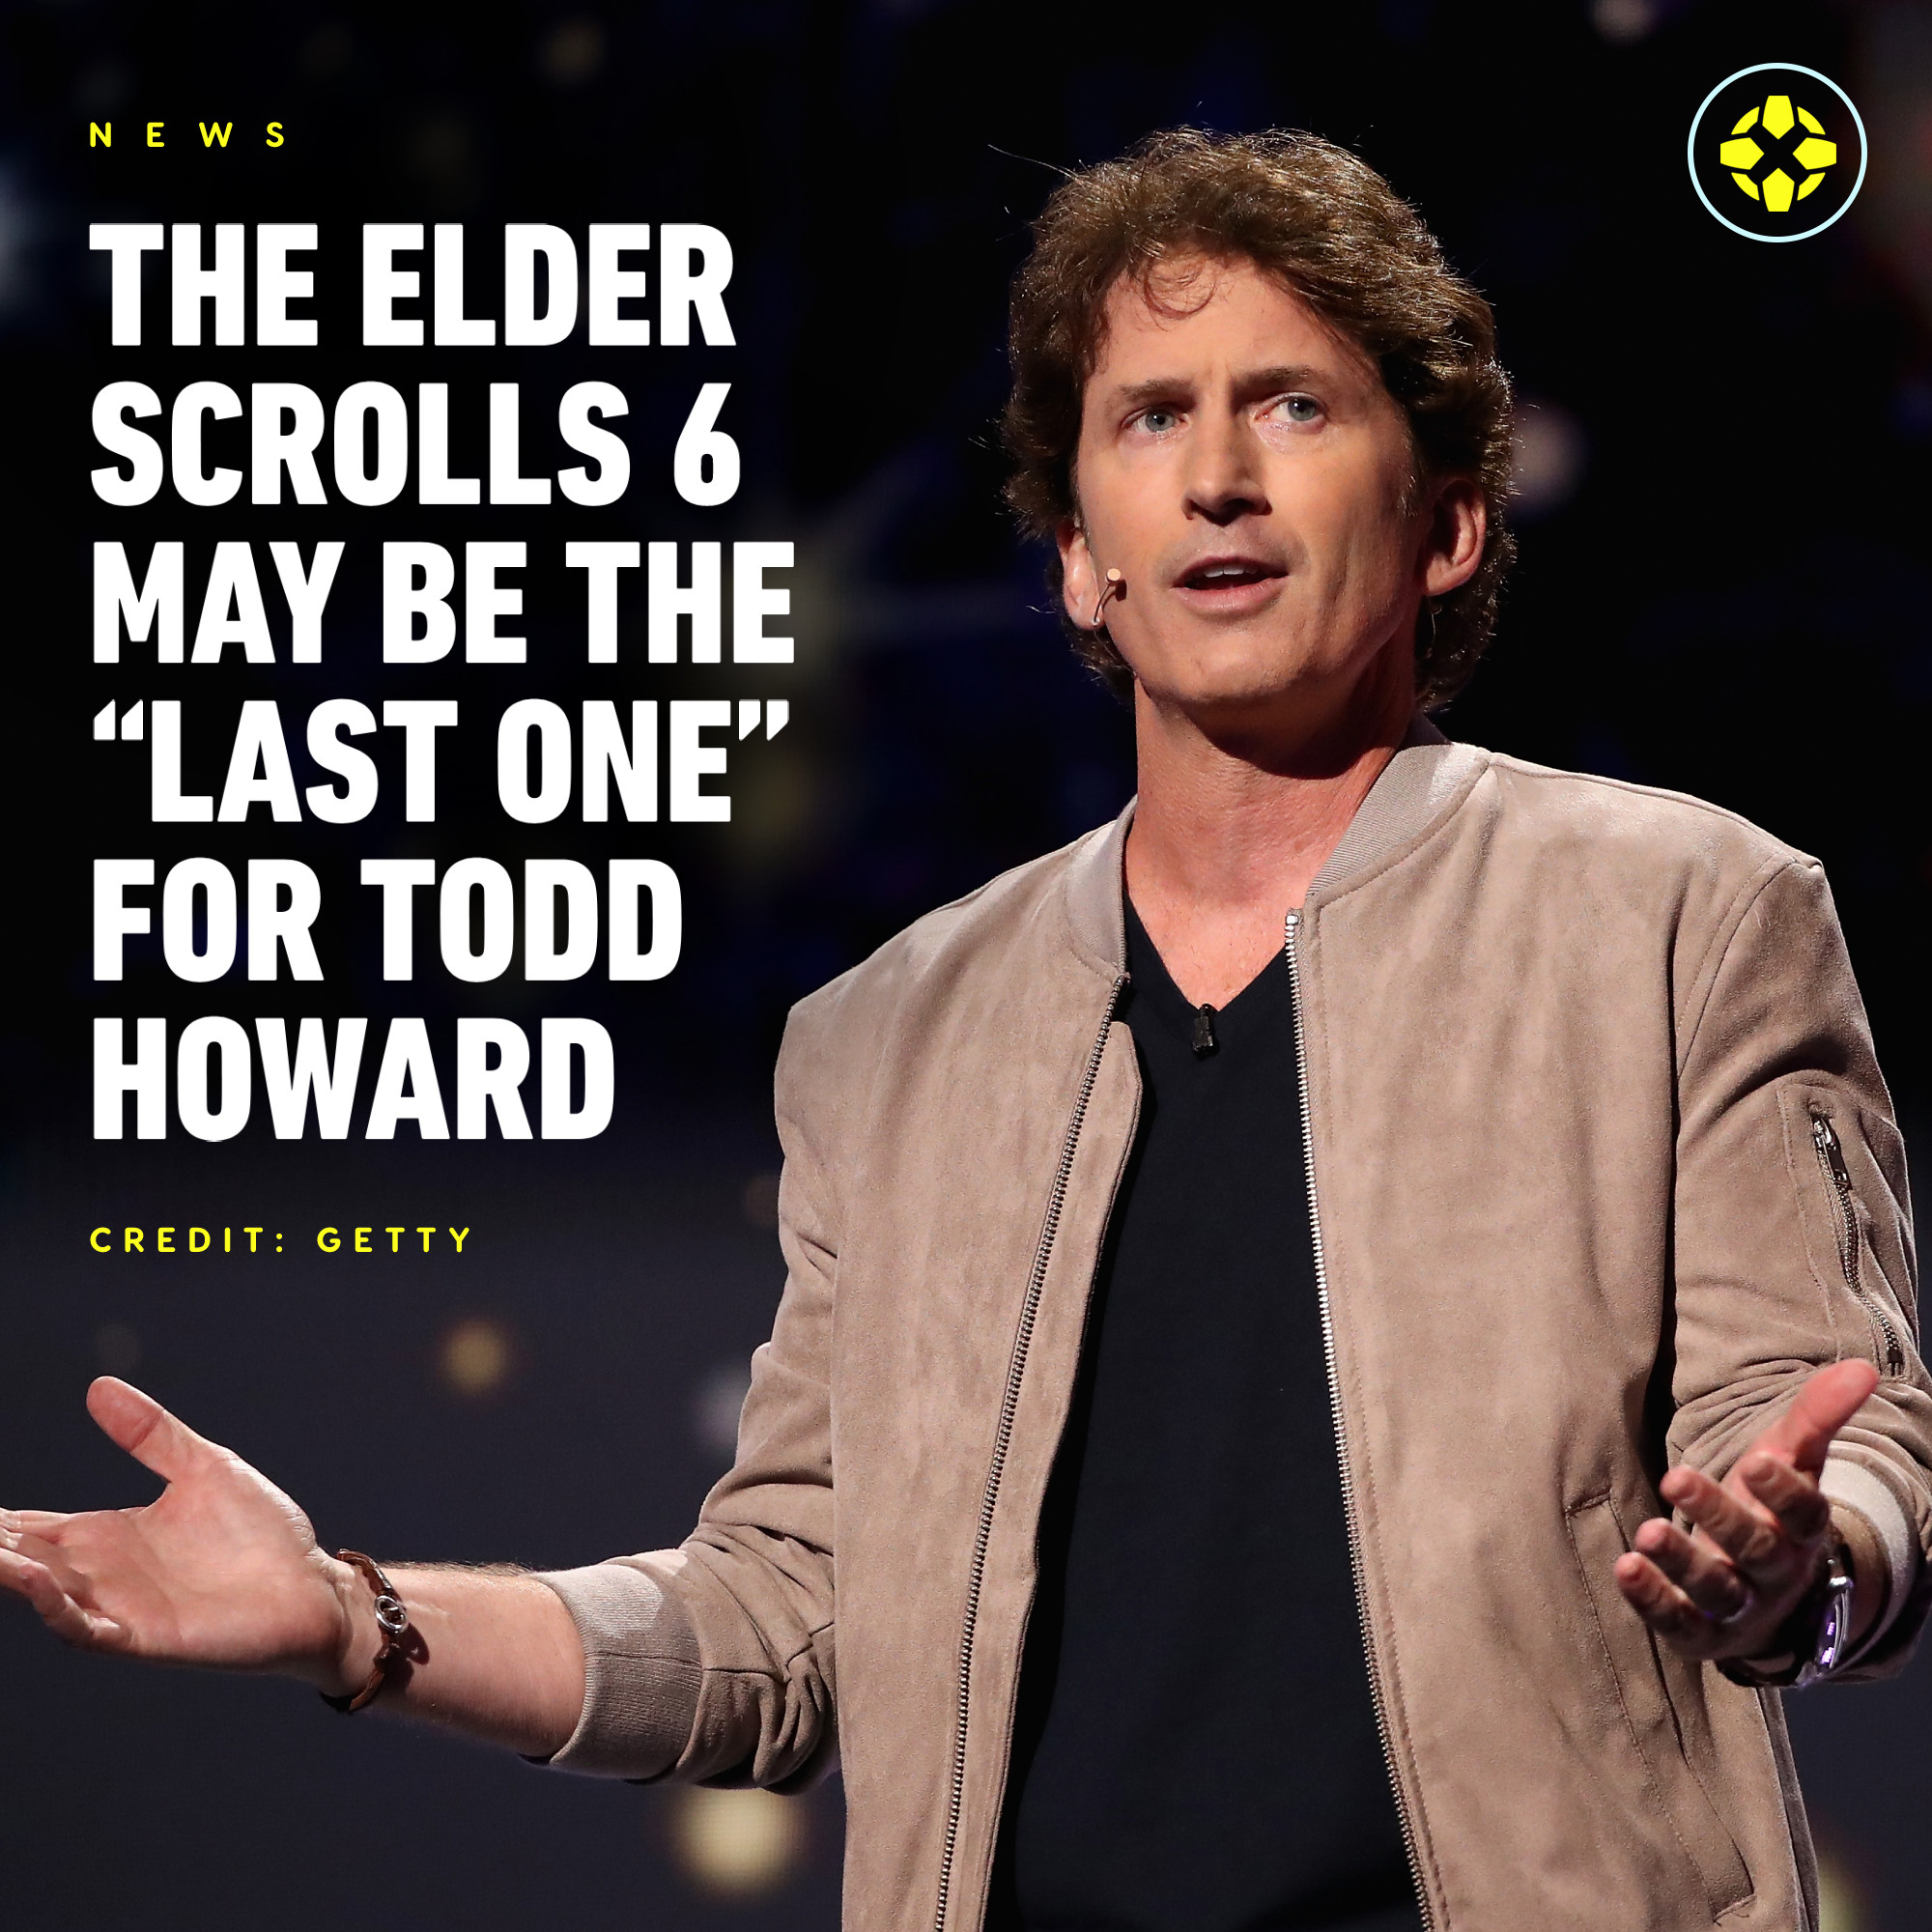 Scrolls Todd Howard kinda wishes he hadn't announced The Elder